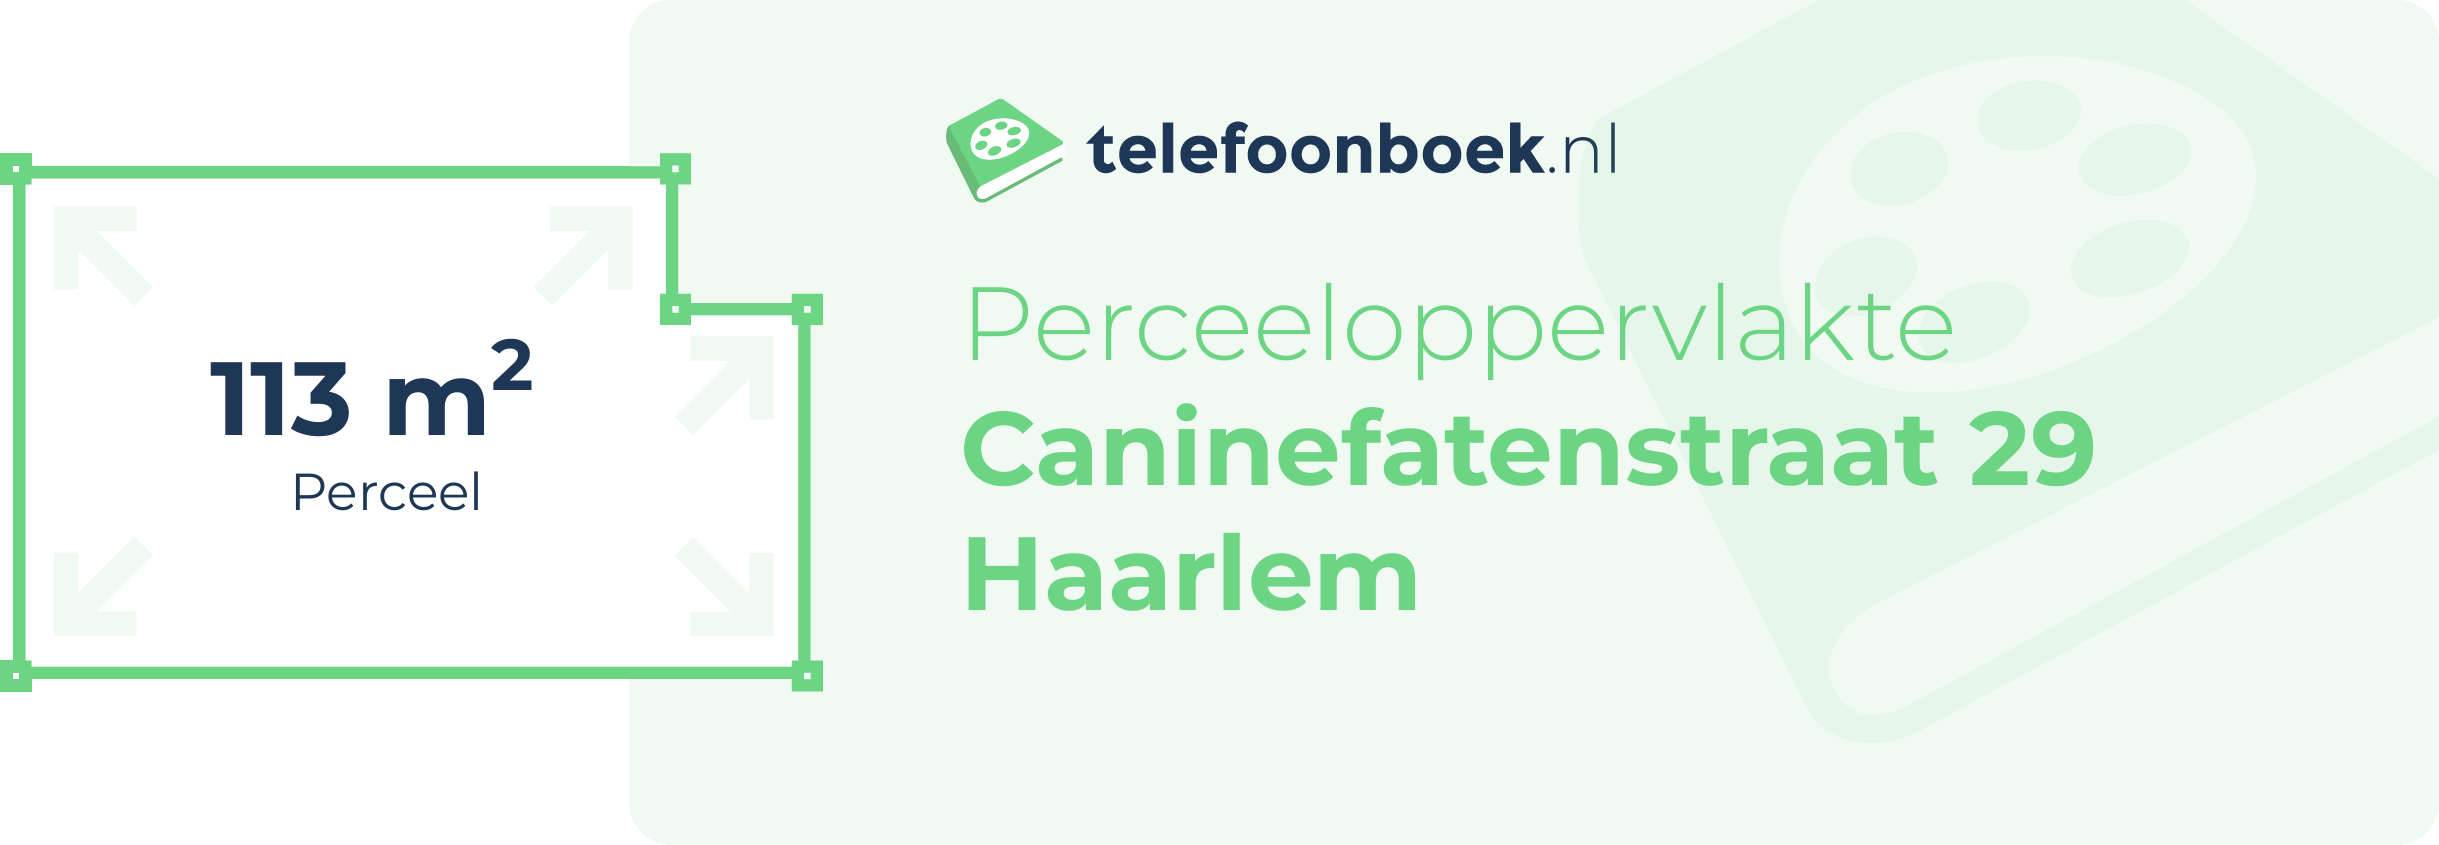 Perceeloppervlakte Caninefatenstraat 29 Haarlem